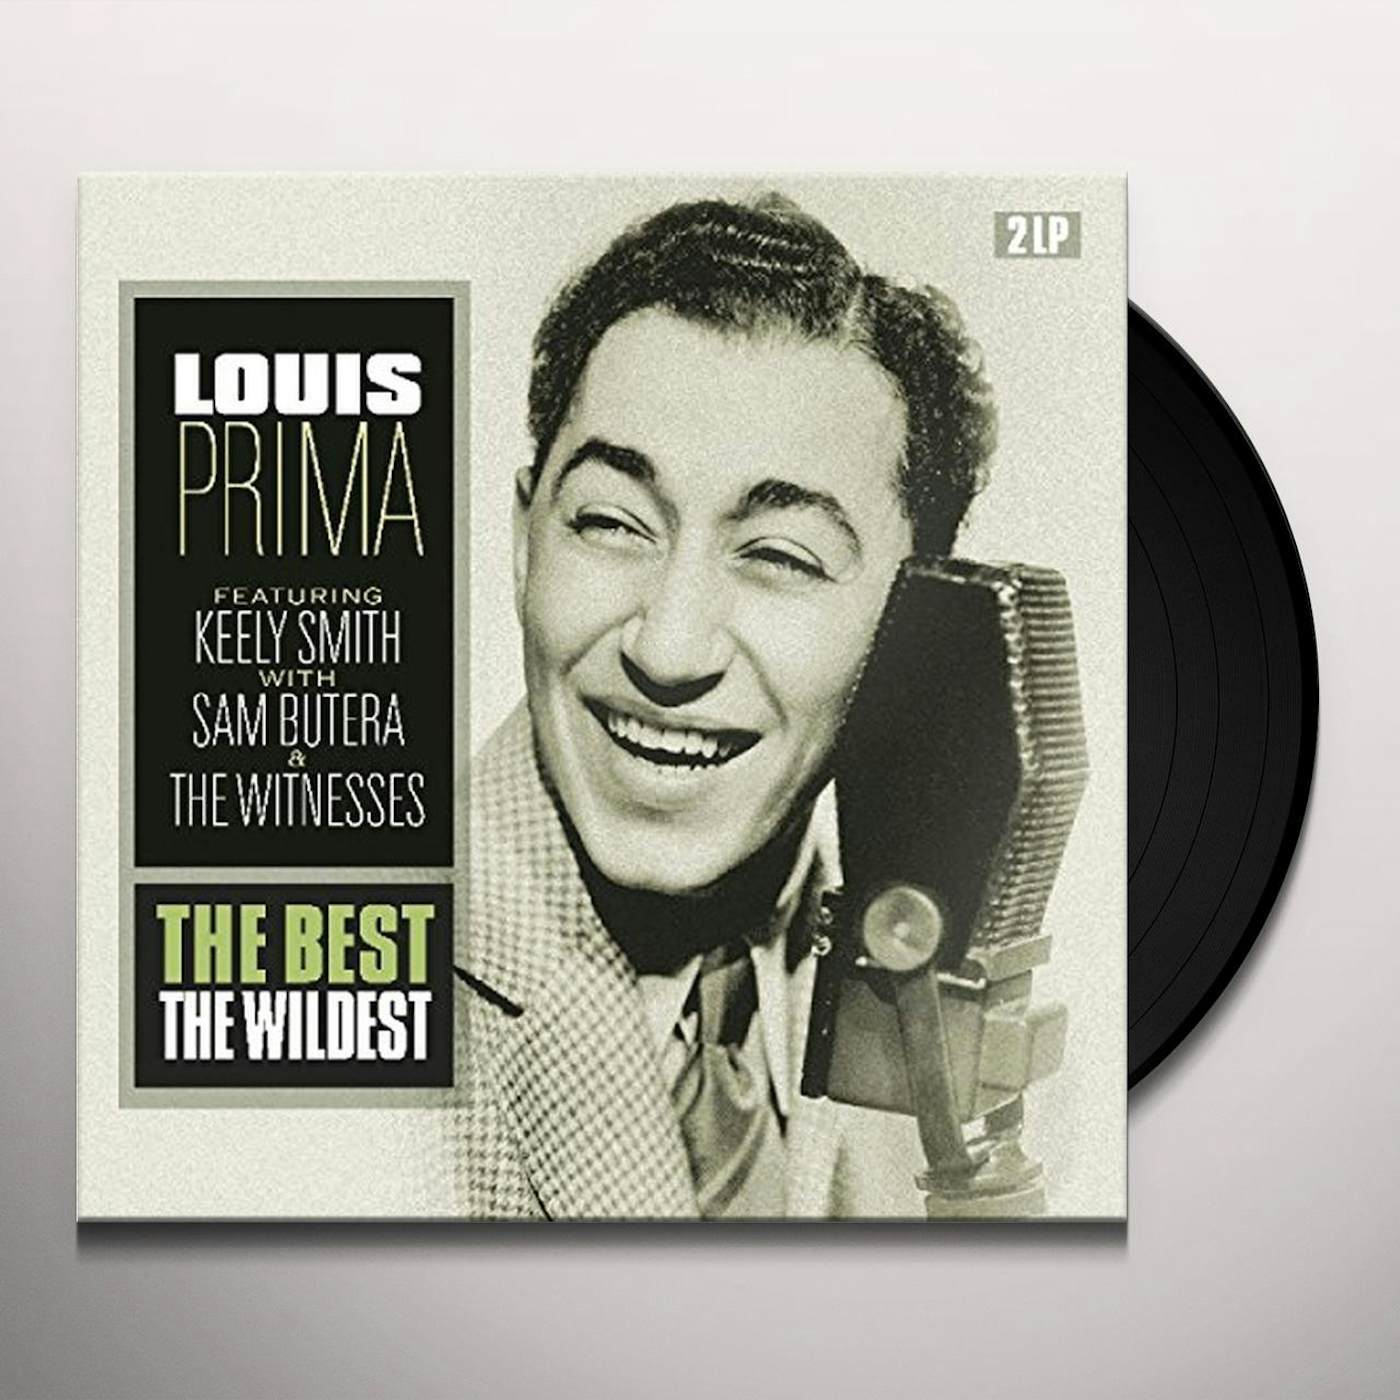 Vinyl Louis Prima The Wildest! Just A Gigolo album LP Swing Jazz Bop